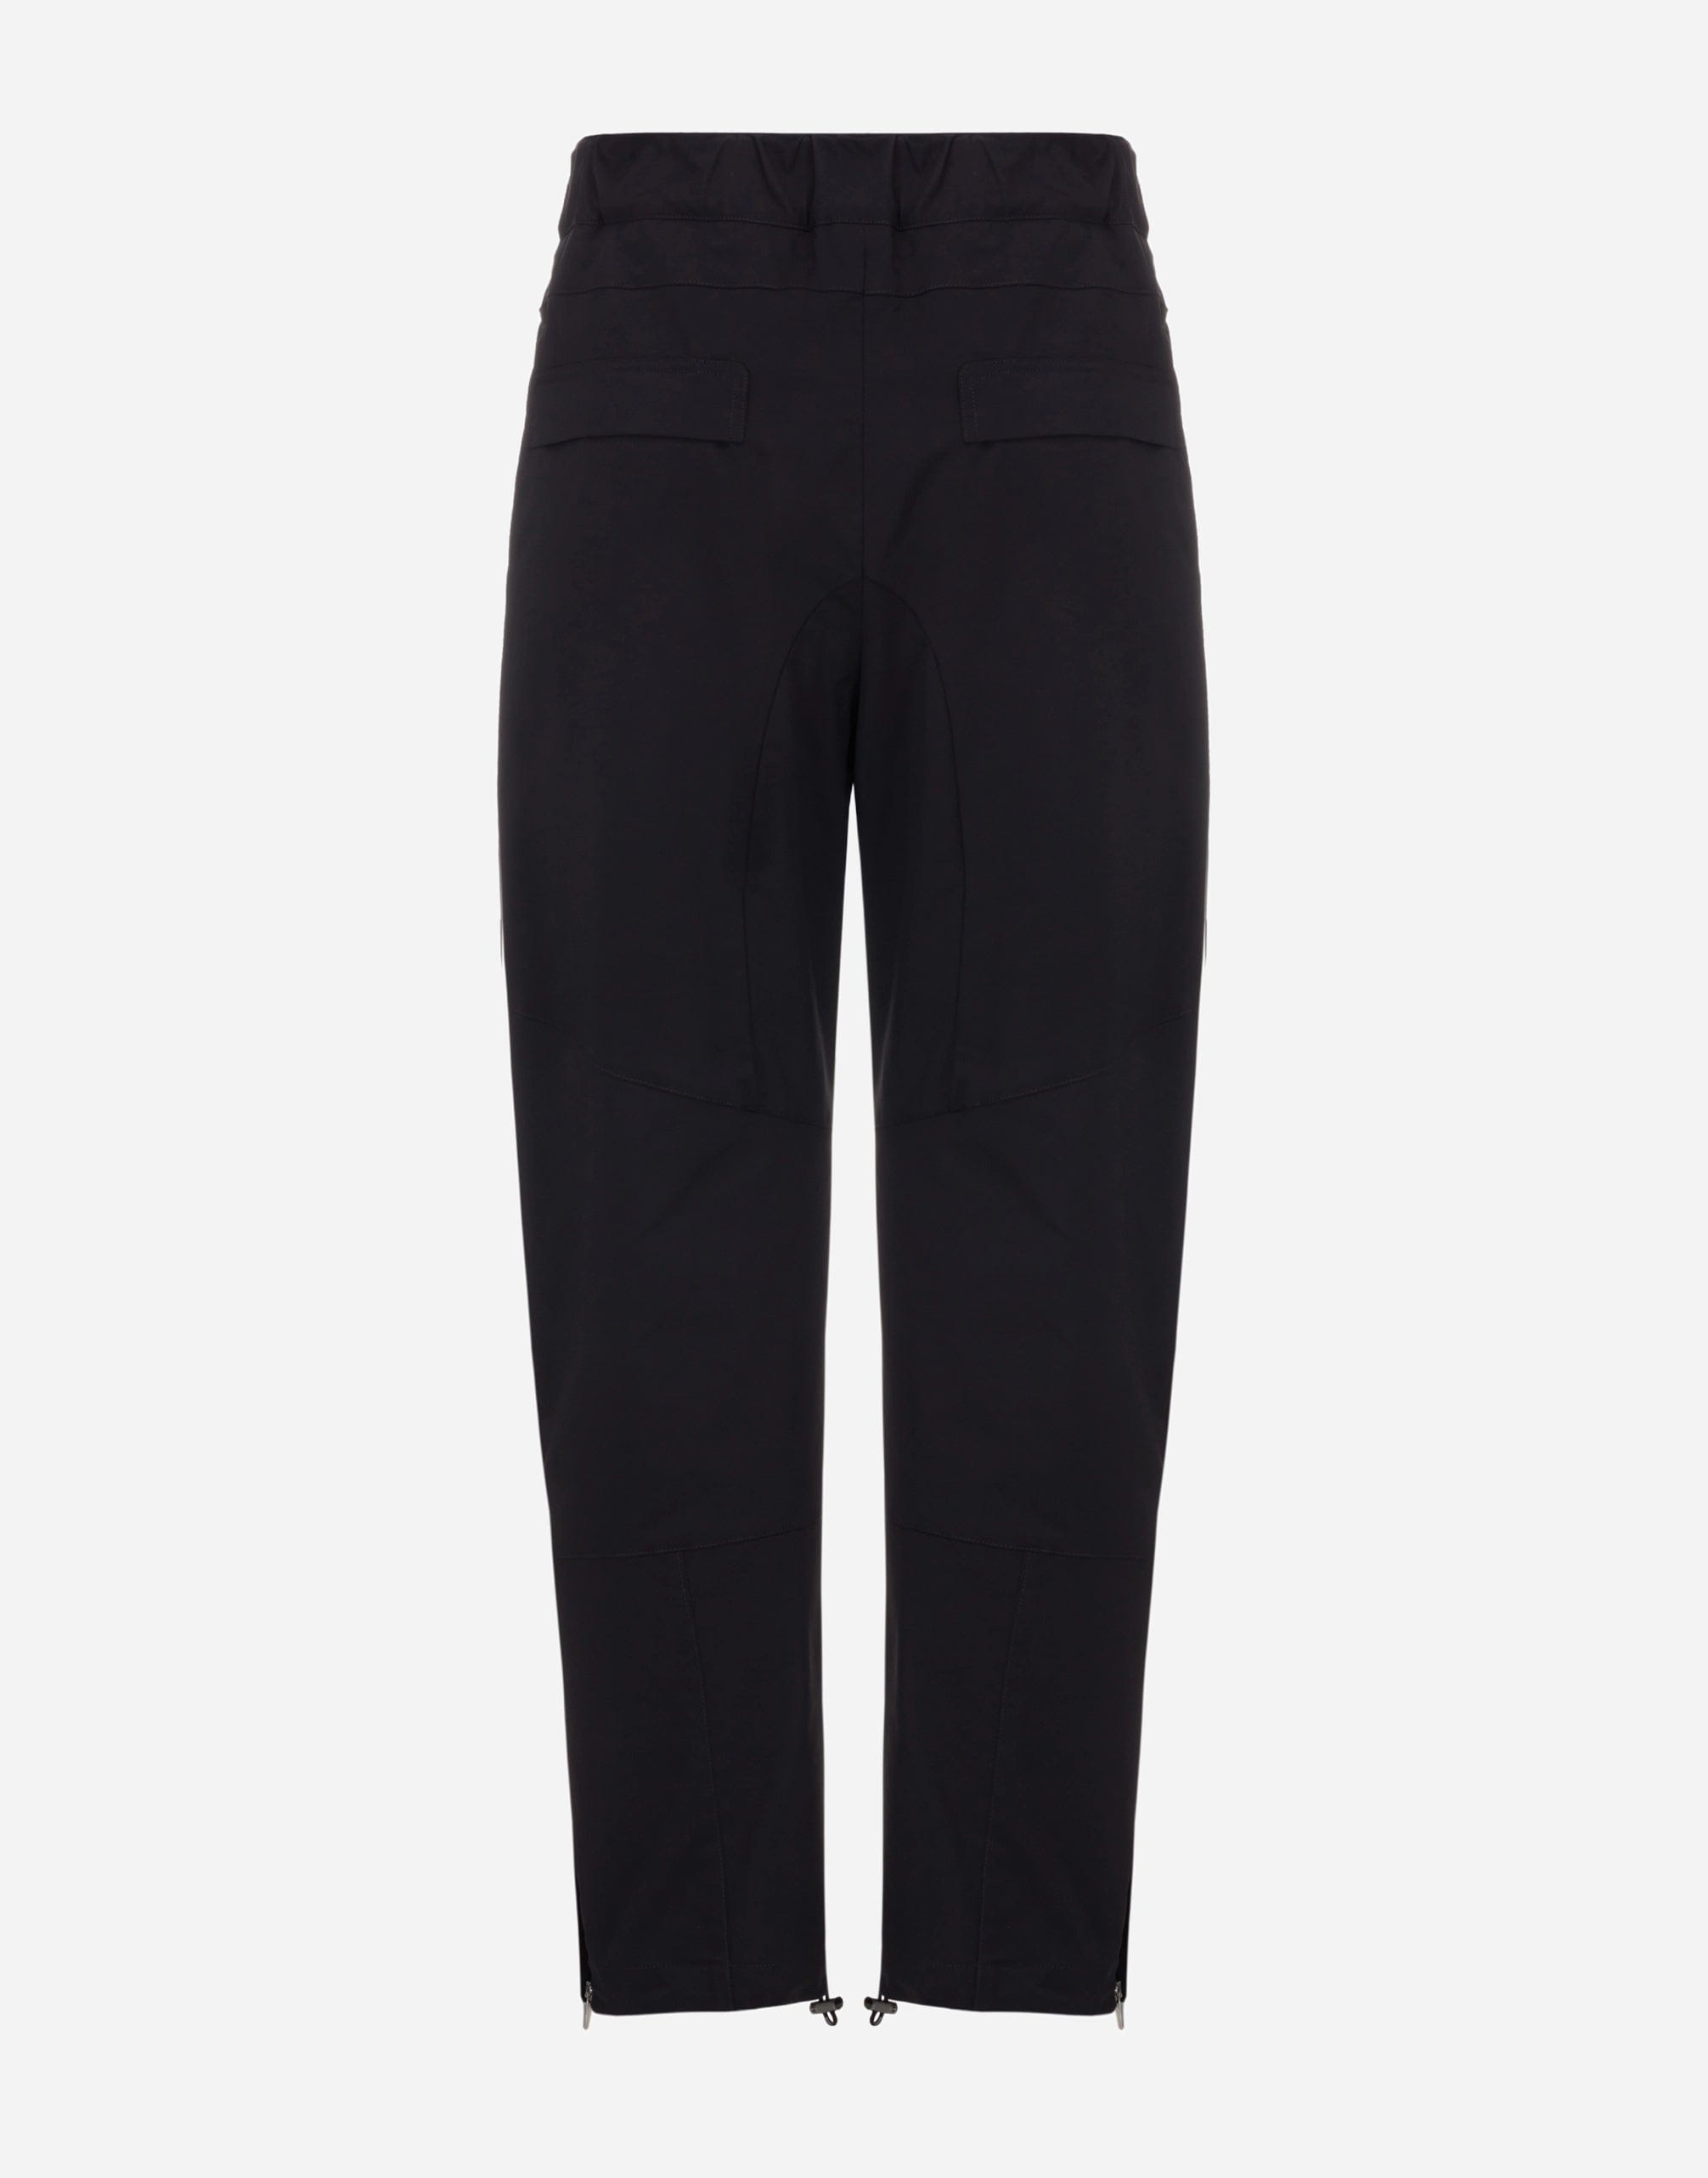 Dolce & Gabbana Technical Fabric Pants